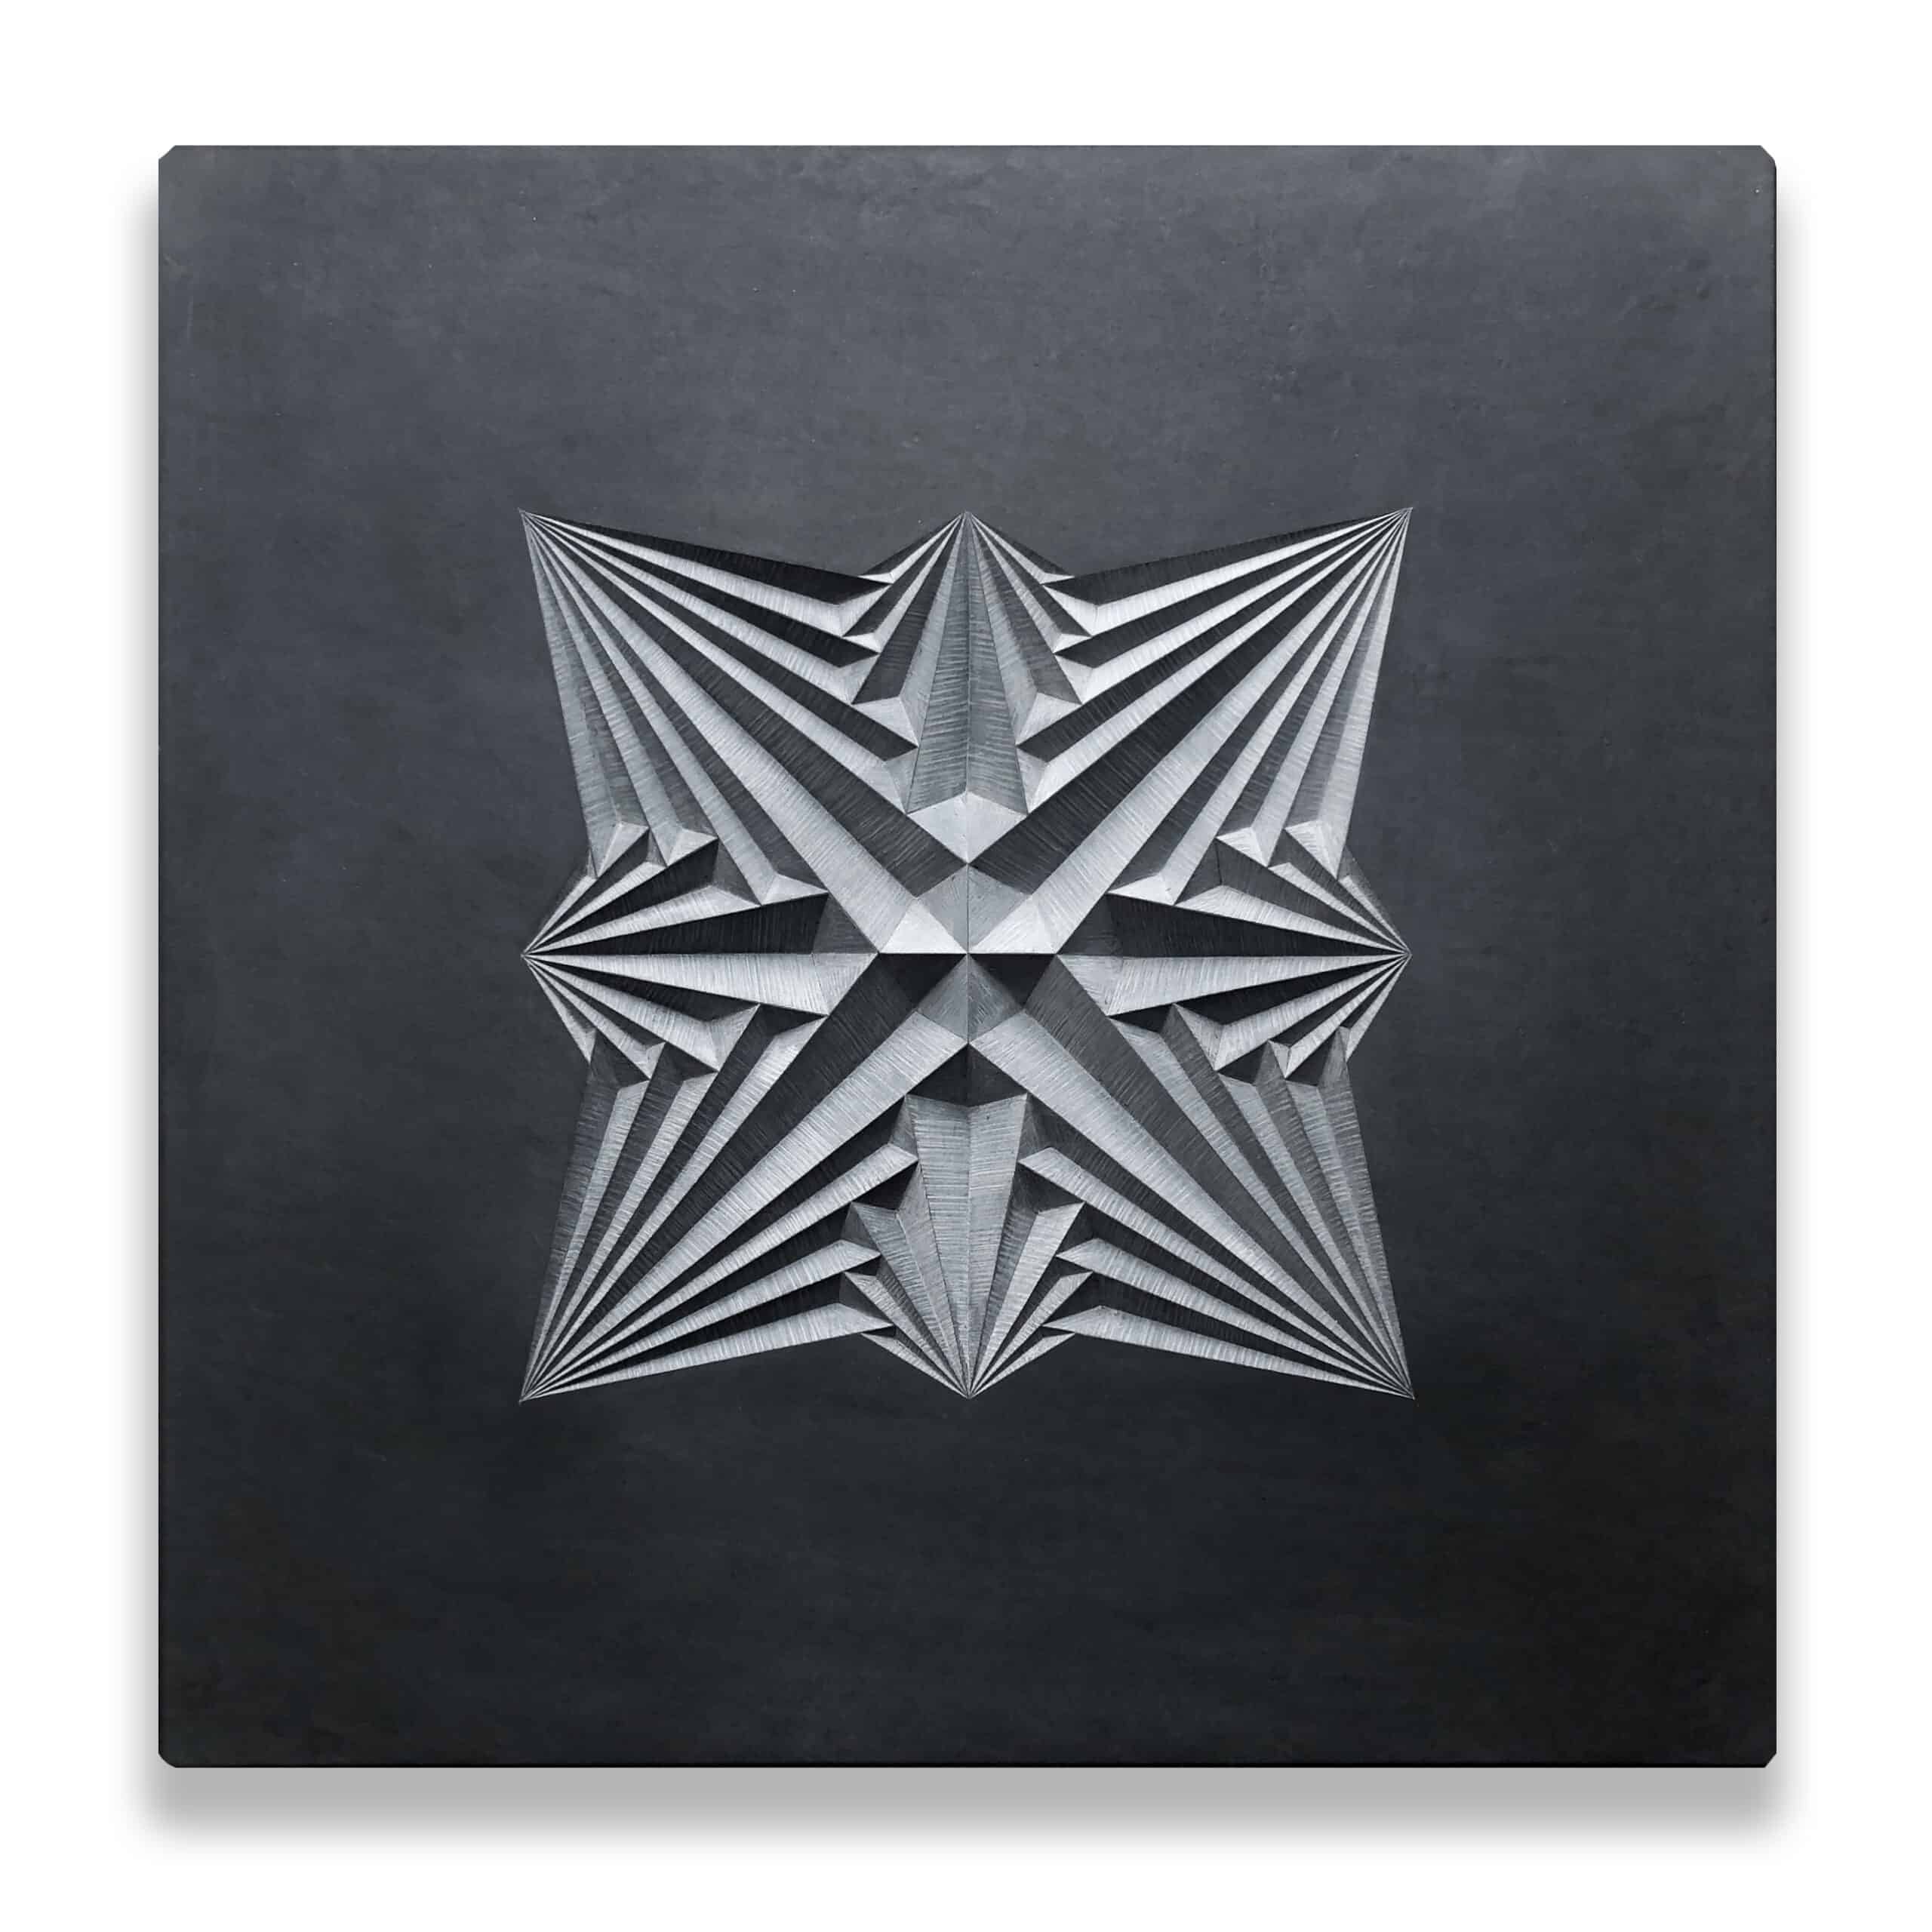 linear geometric pattern carved into dark grey Welsh slate